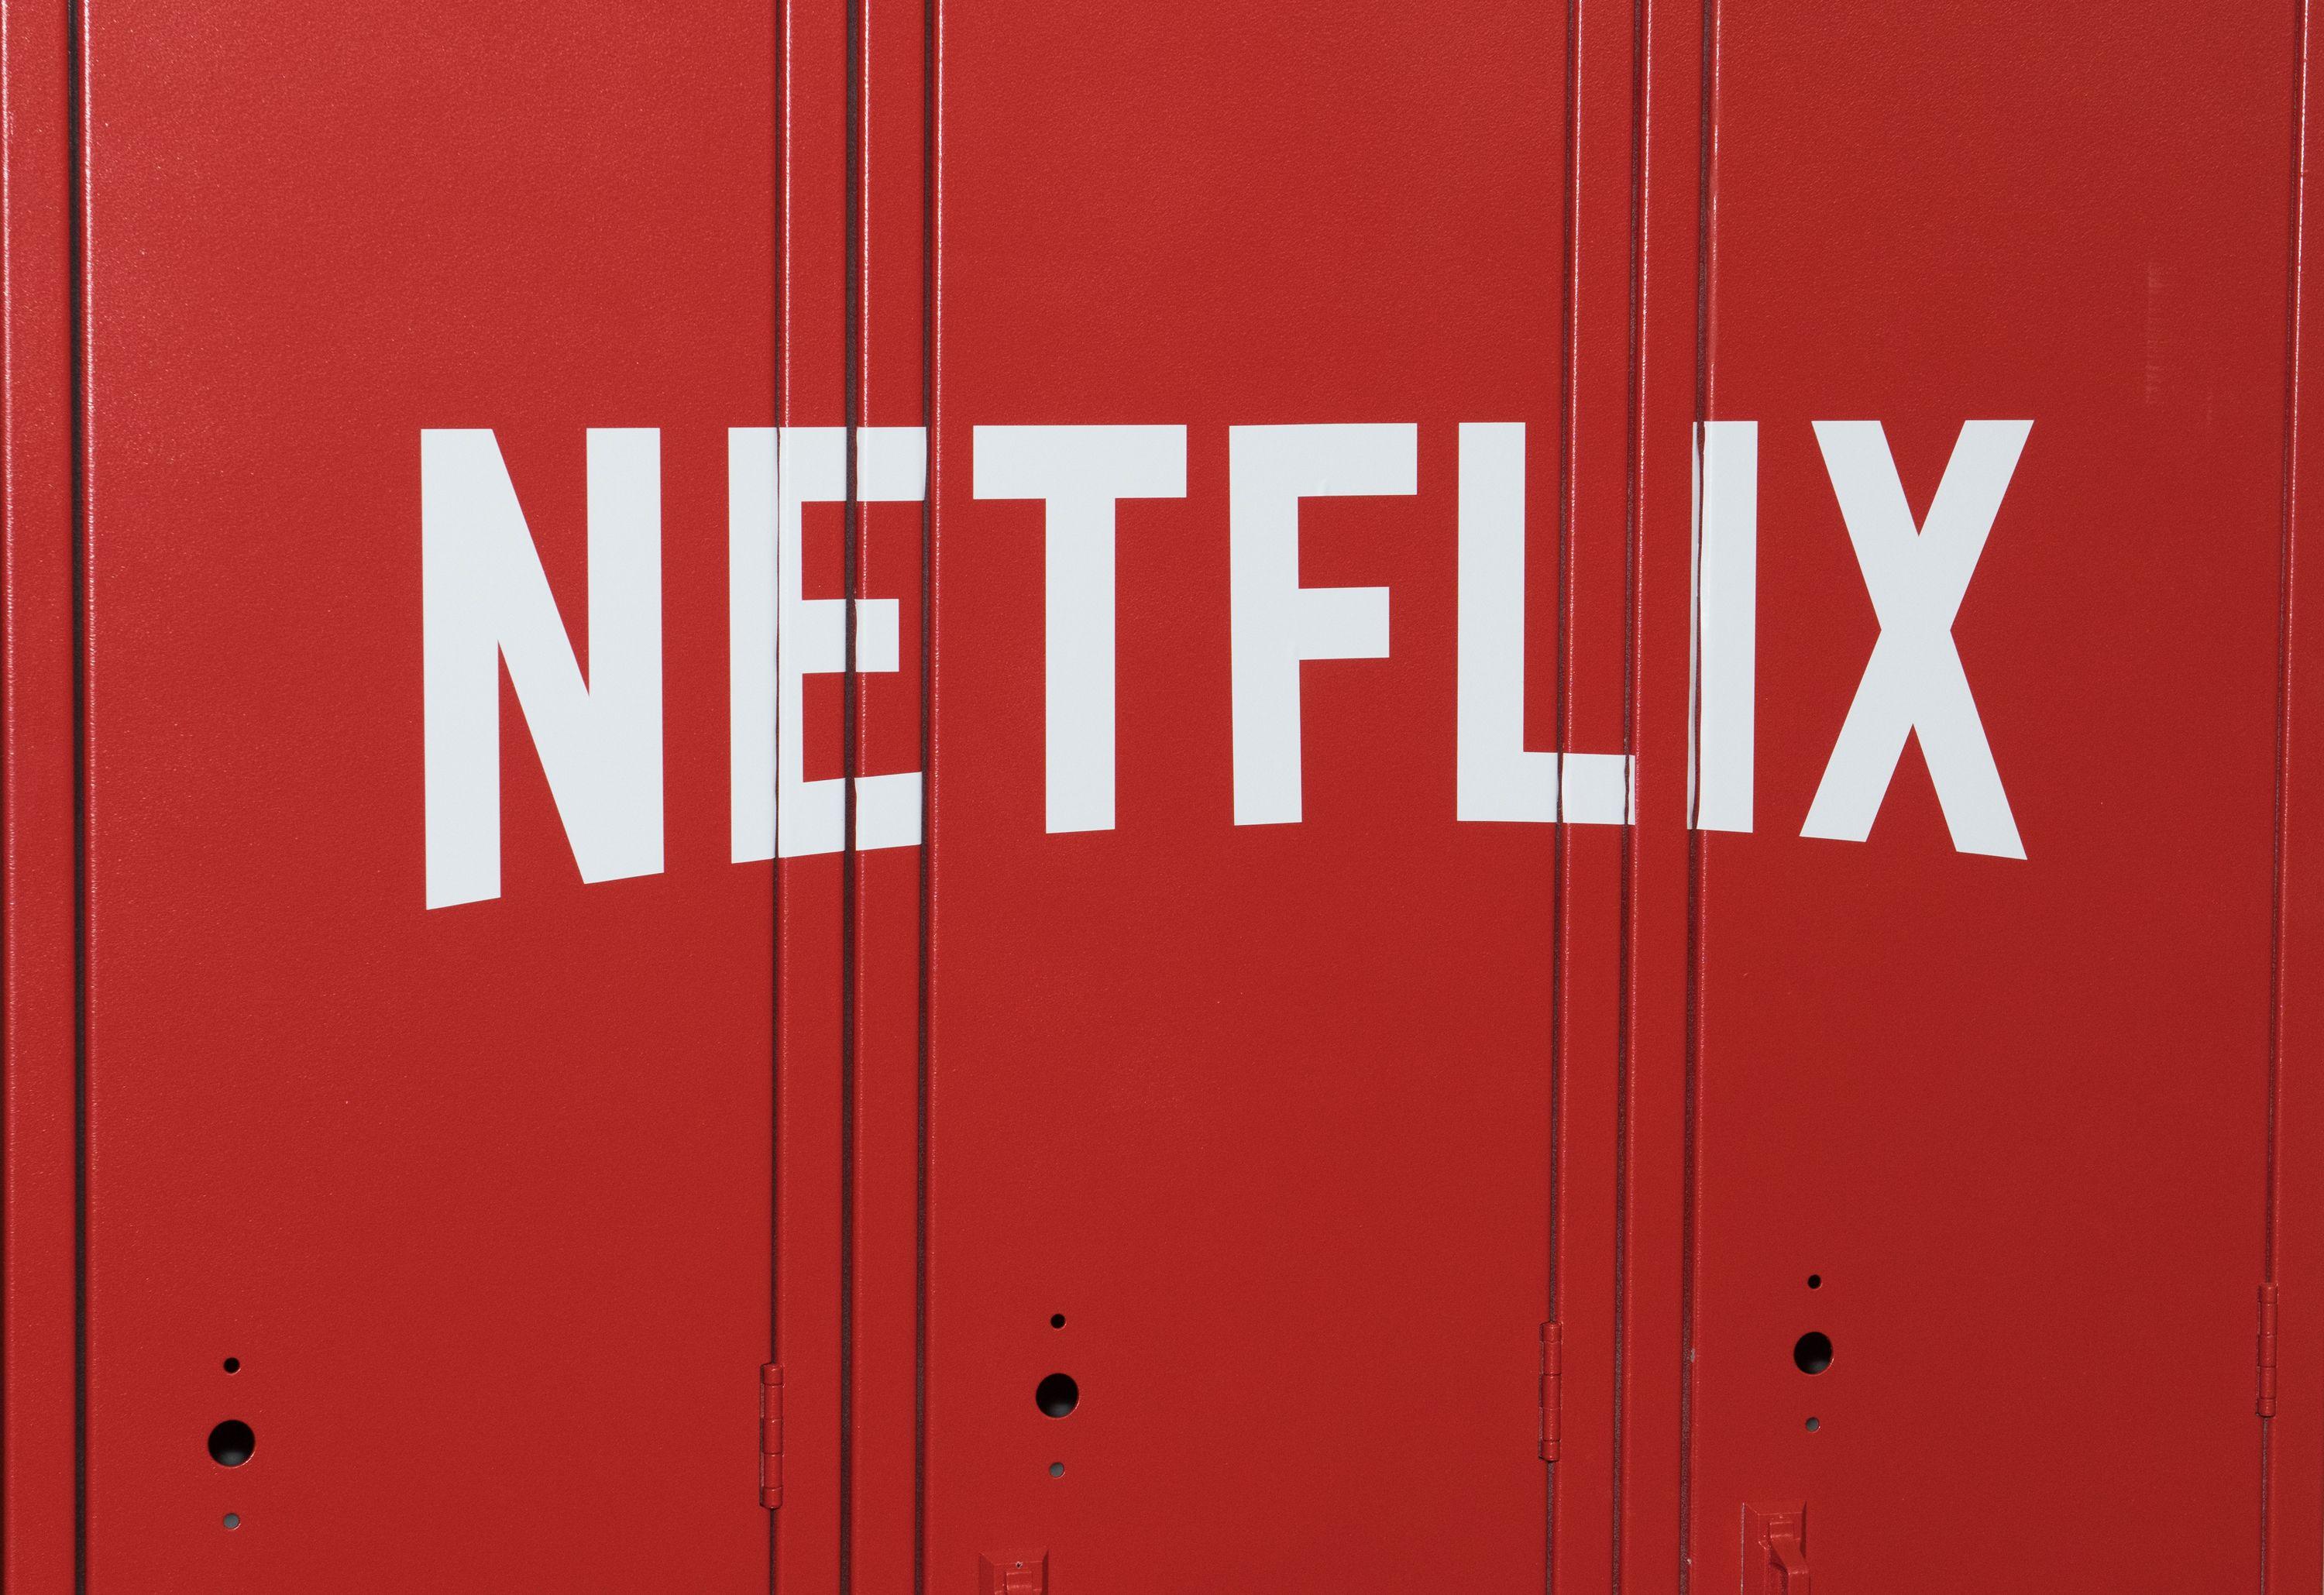 Netflicks Logo - Netflix Earnings: Why It Gathers Customer Data But Does Not Share It